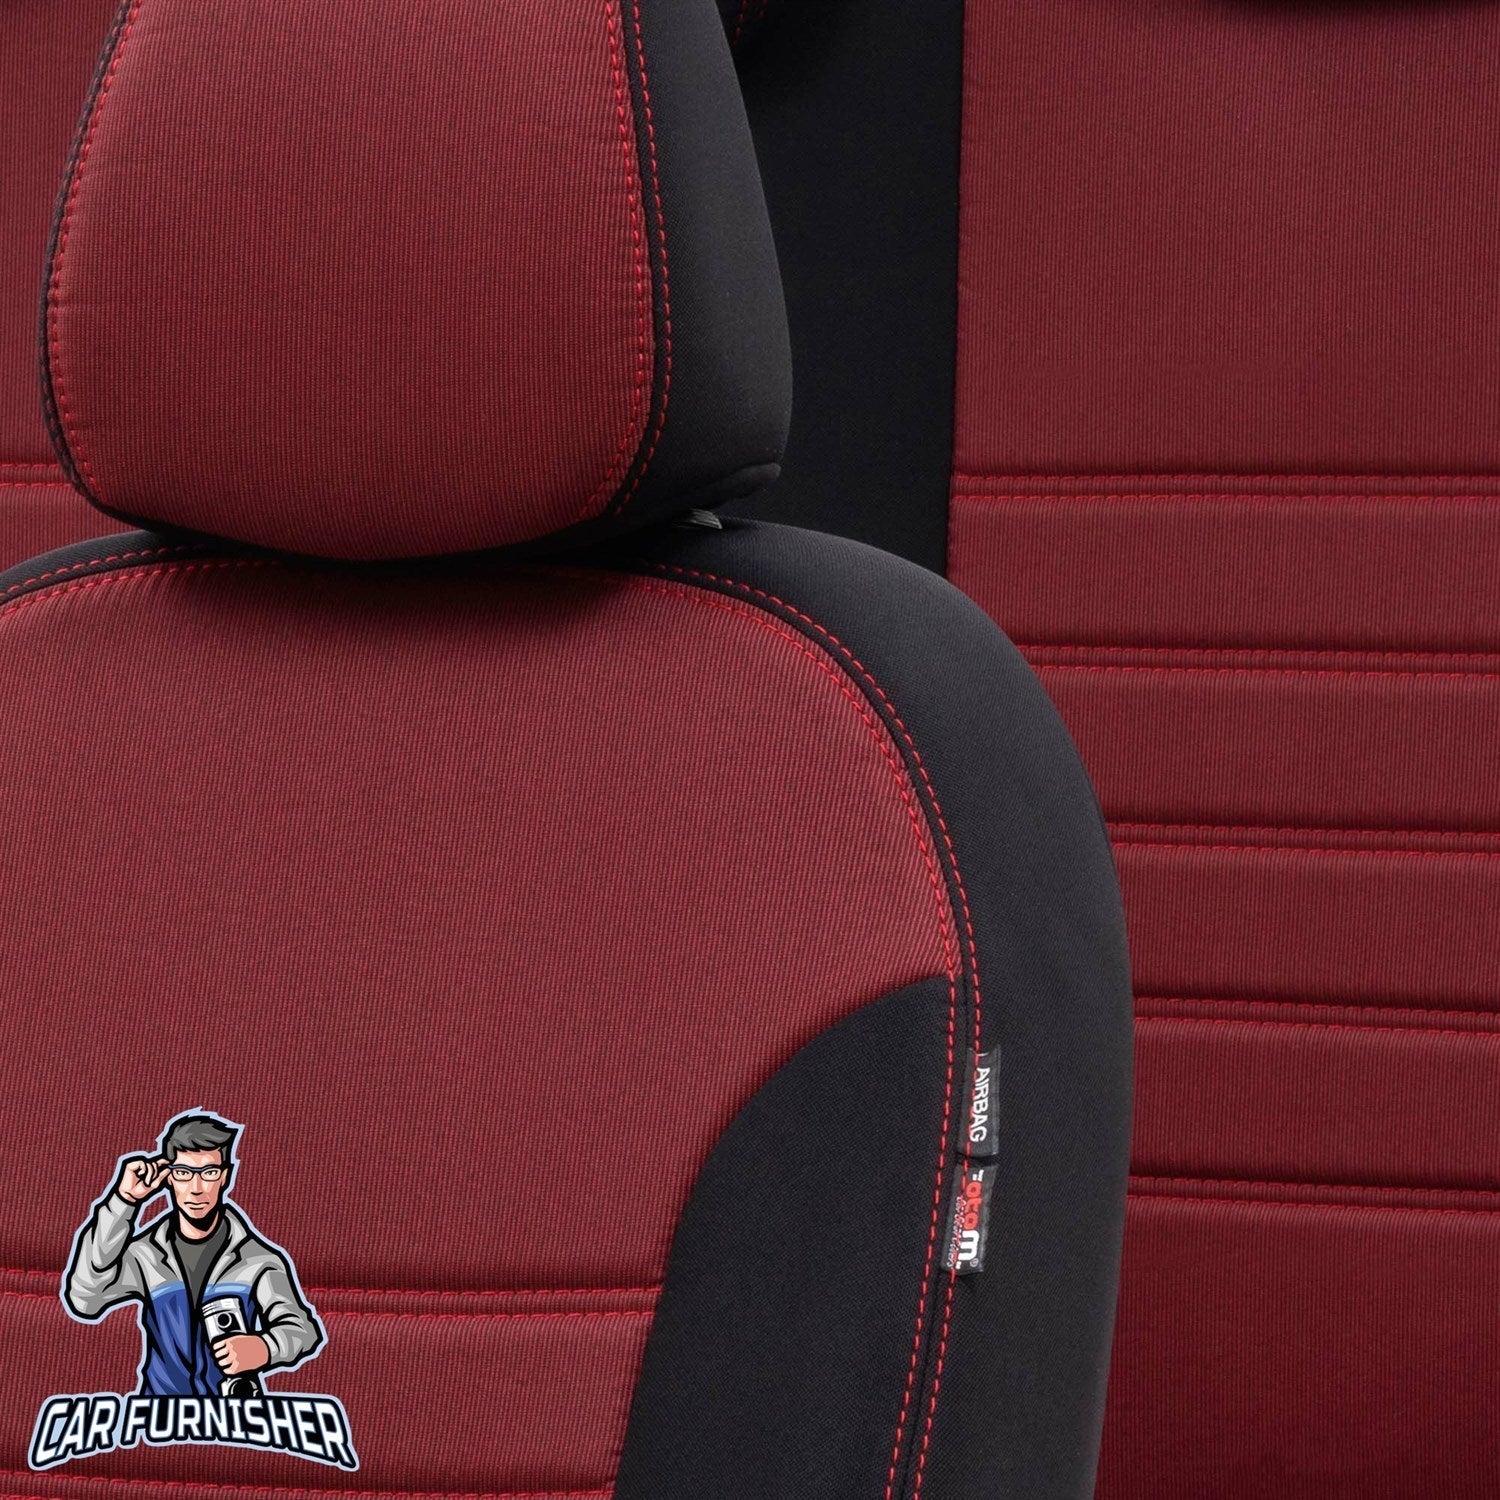 Chery Tiggo Seat Covers Original Jacquard Design Red Jacquard Fabric